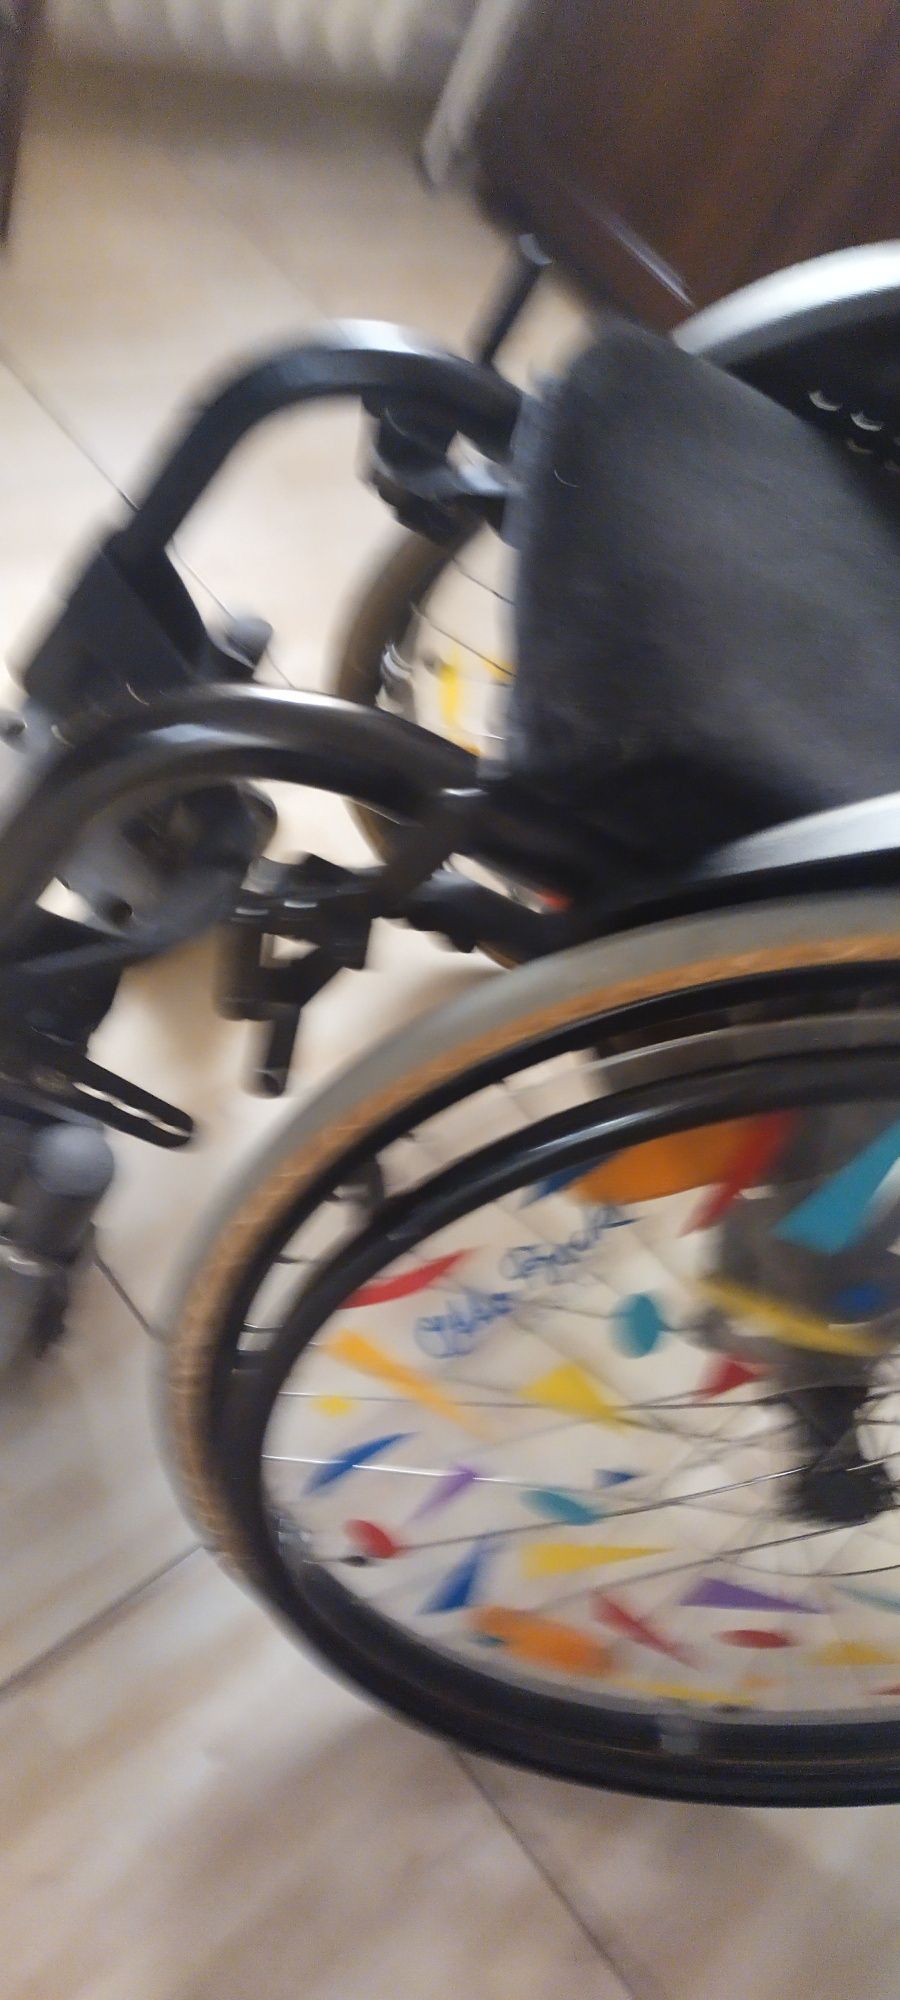 Wózek inwalidzki Otto bock